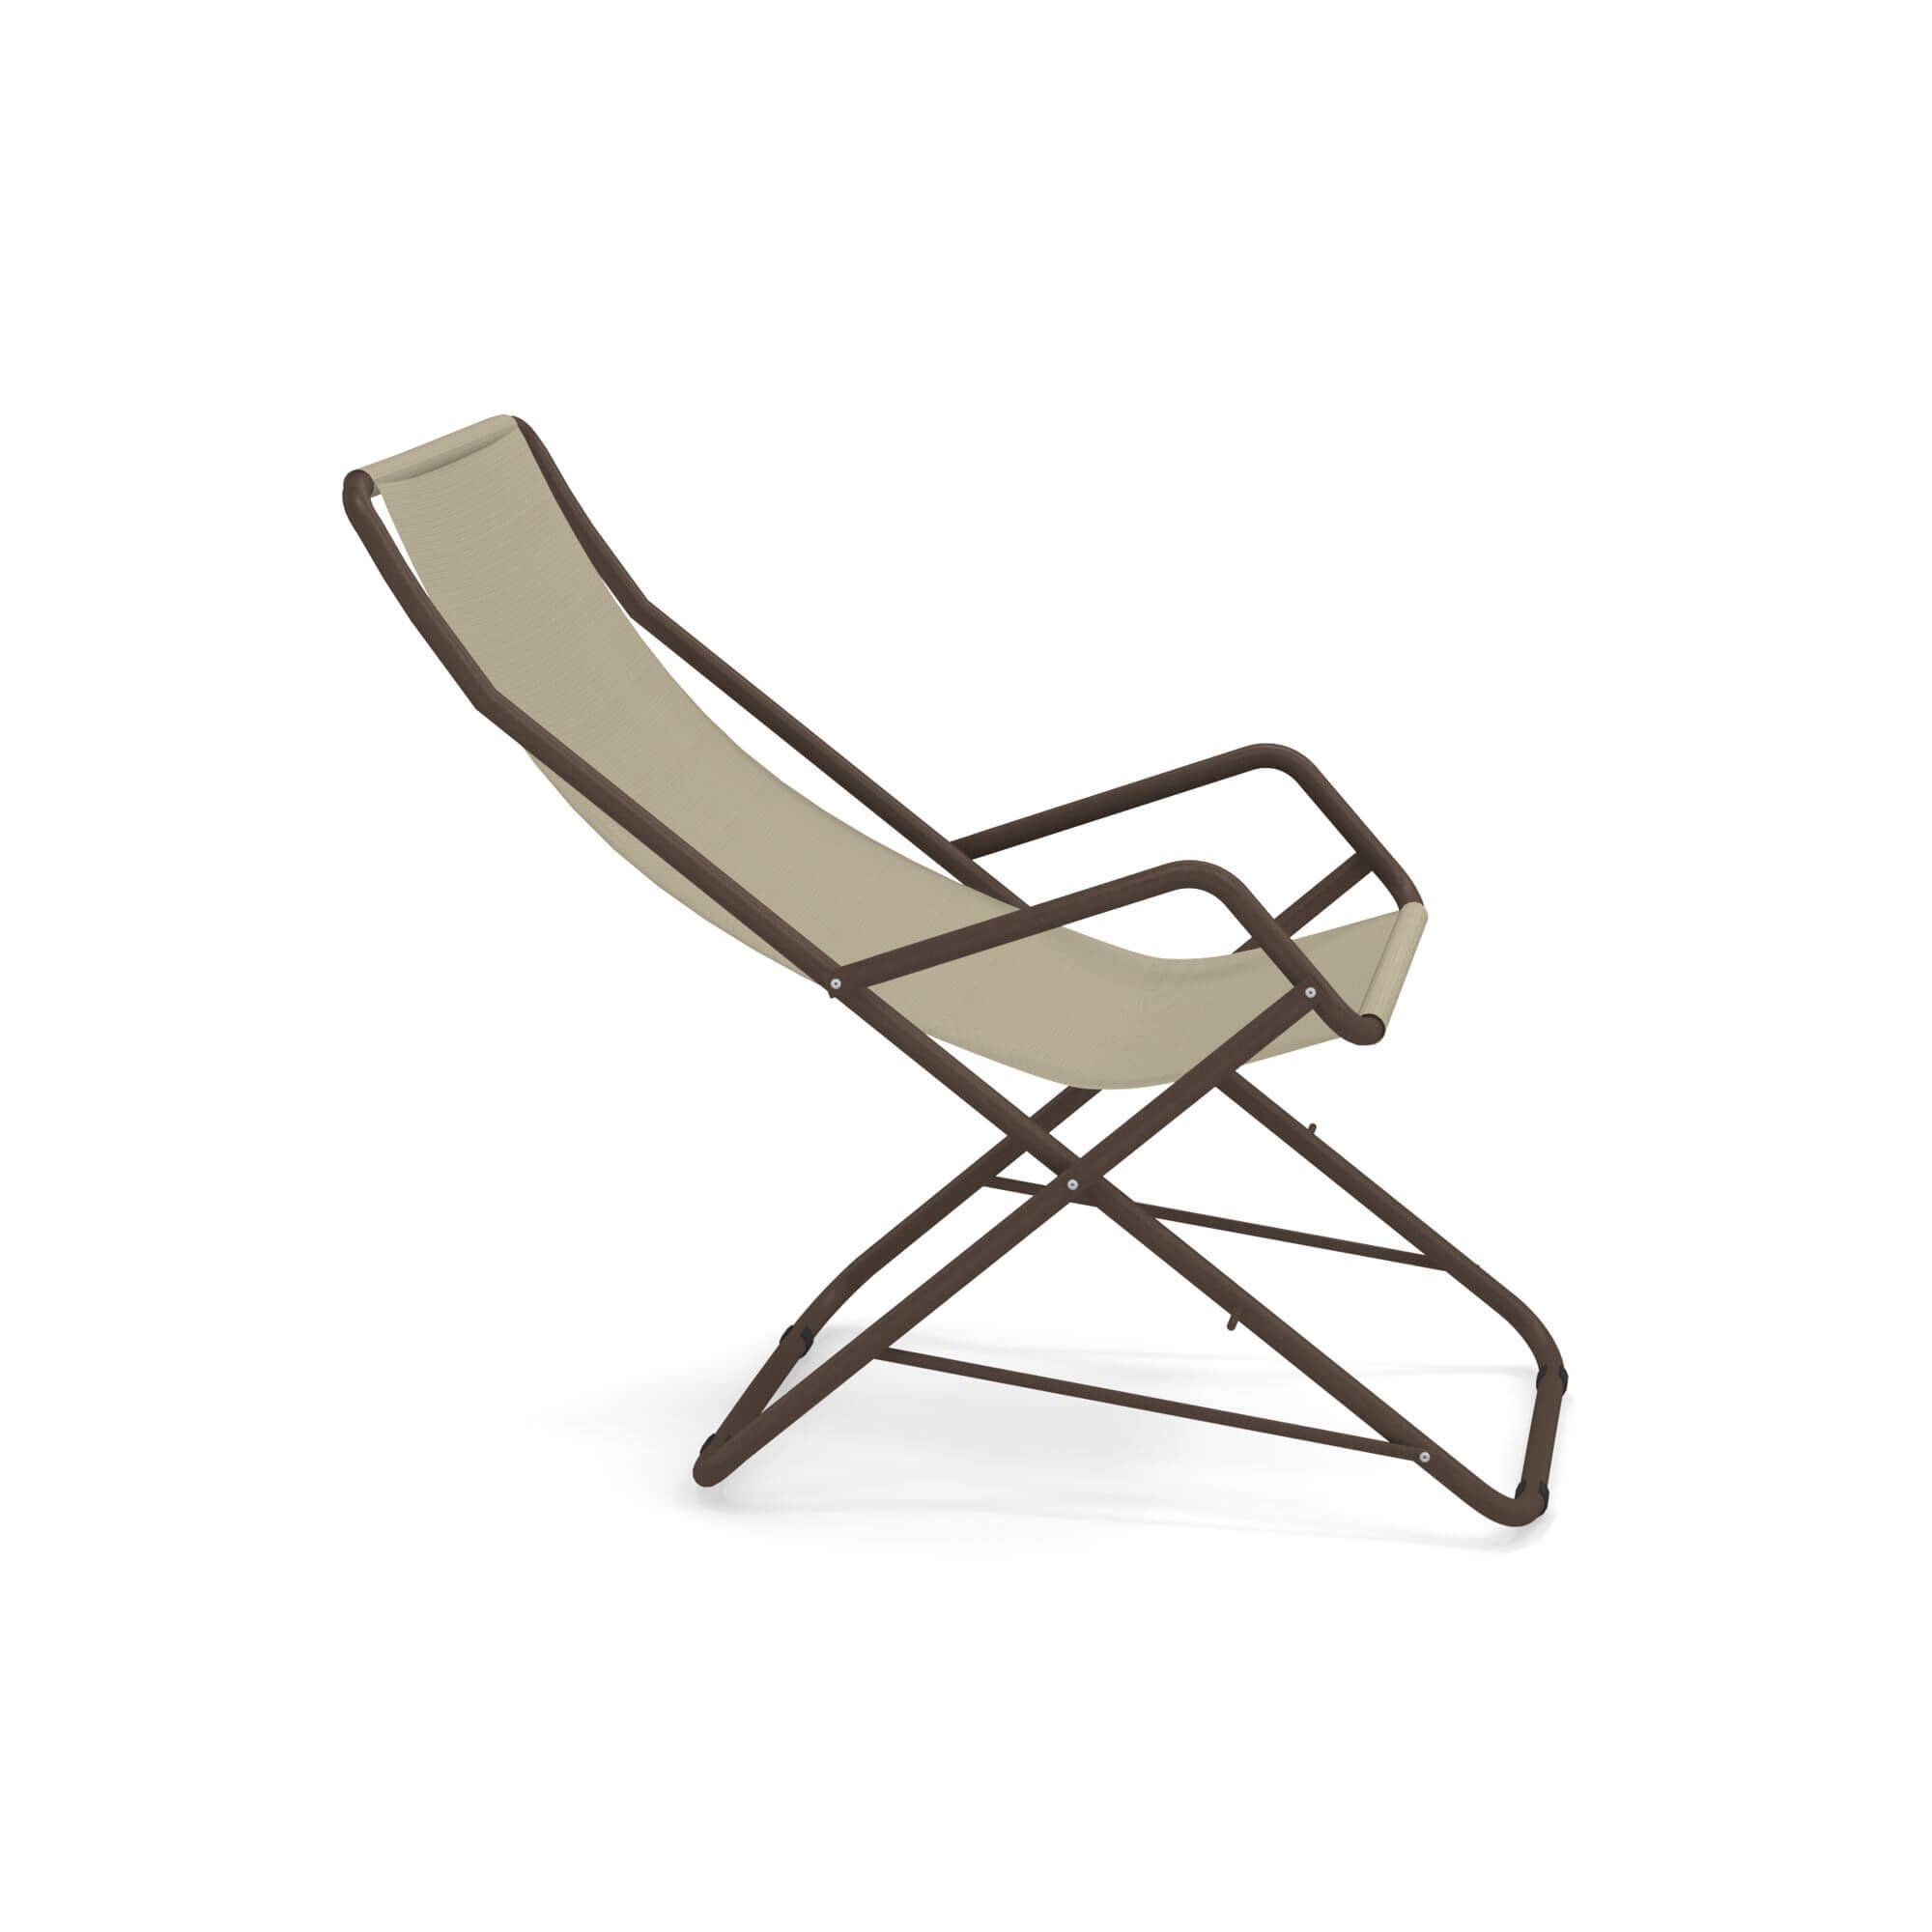 Bahama Chair lounge from Emu, designed by EMU Design Studio